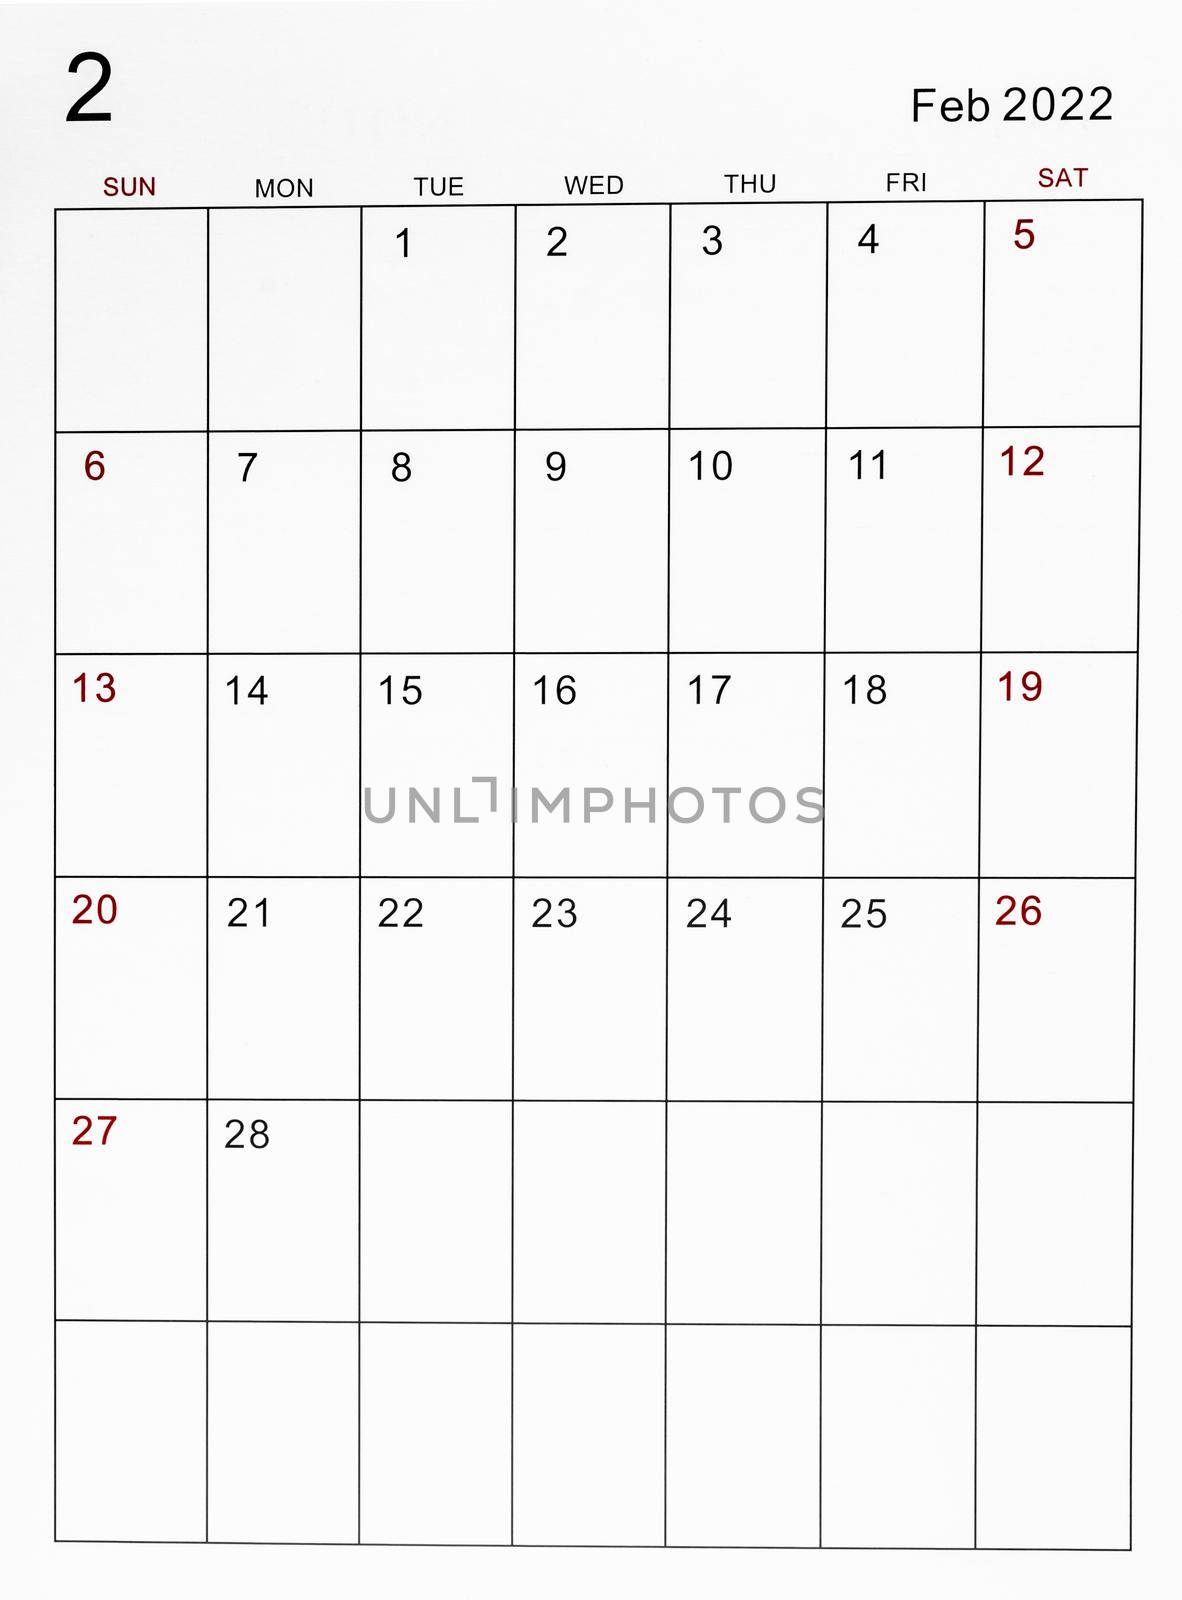 February 2022 calendar template. by Gamjai